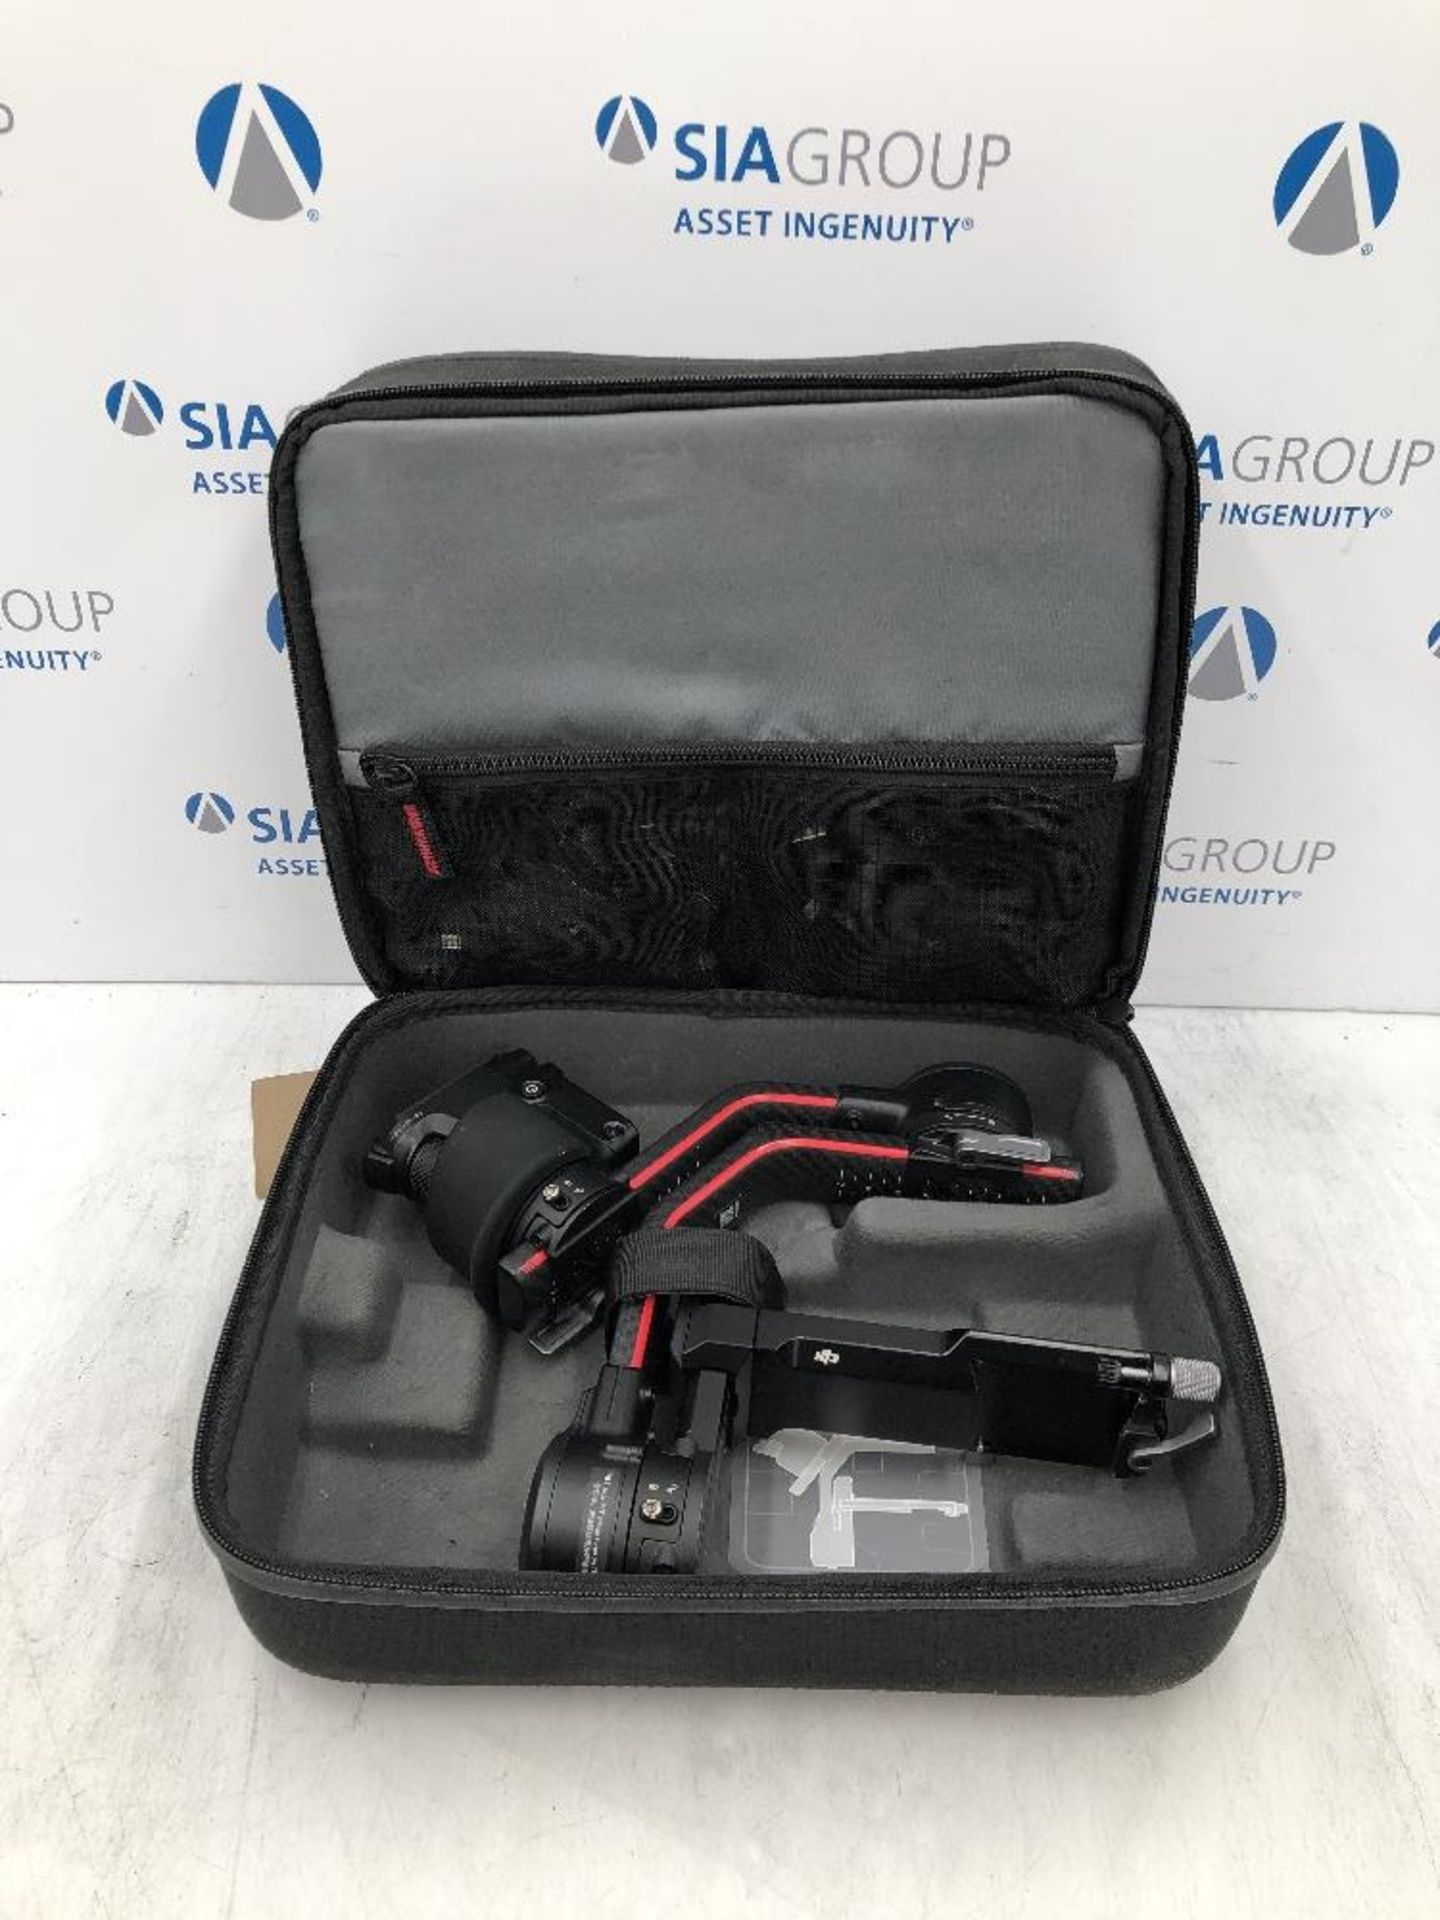 DJI RS 2 Gimbal 3-axis camera Stabiliser Kit for DSLR Cameras - Image 2 of 7